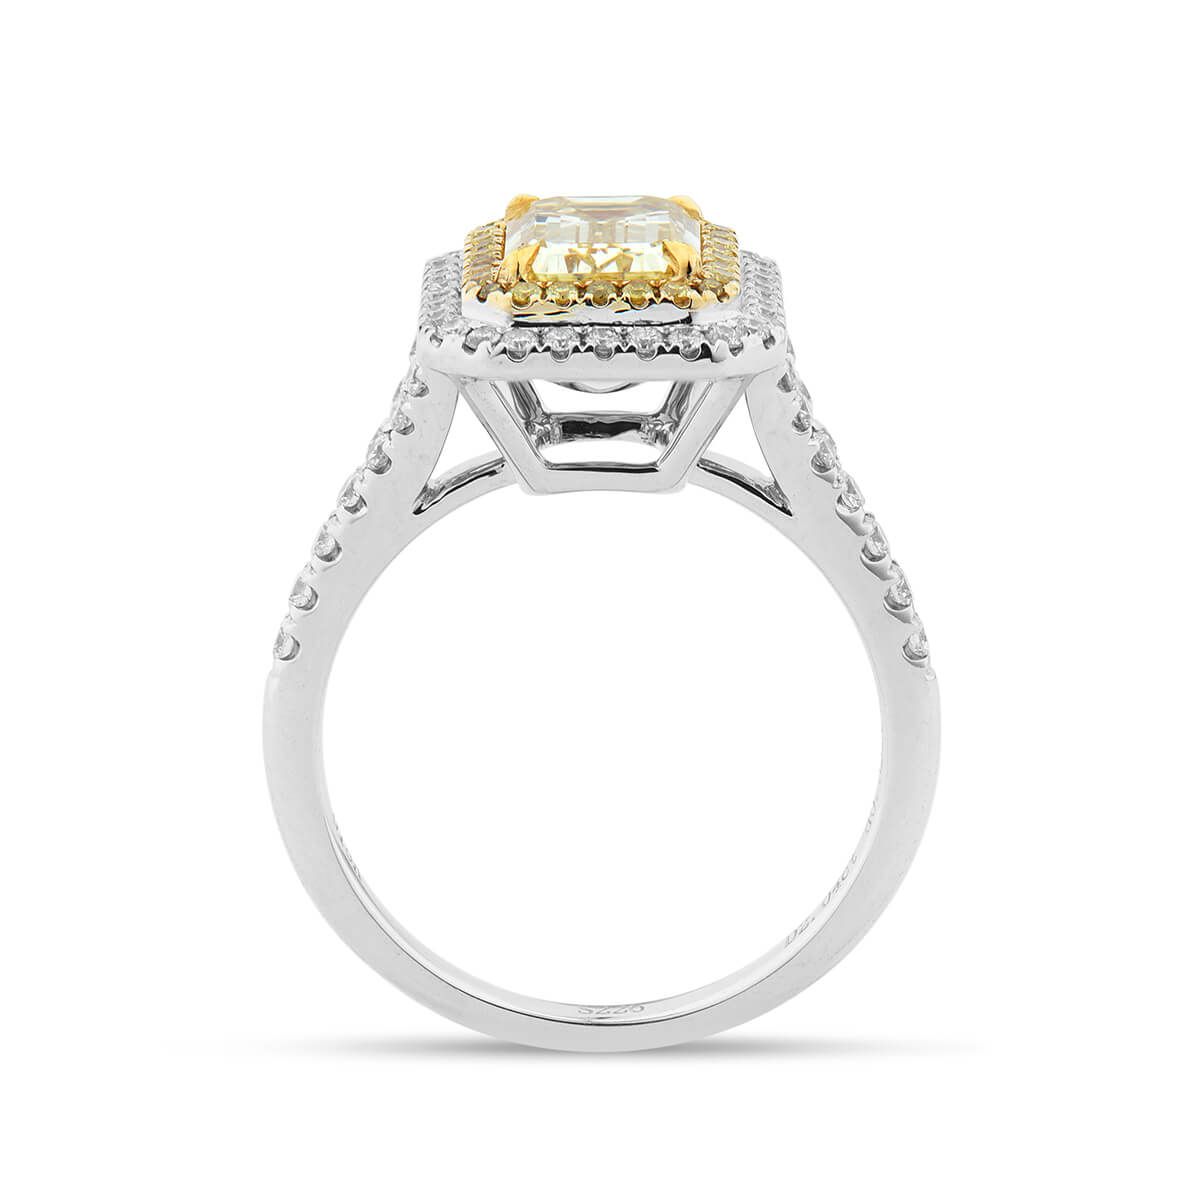 Fancy Yellow Diamond Ring, 2.56 Ct. TW, Emerald shape, GIA Certified, 2183052143